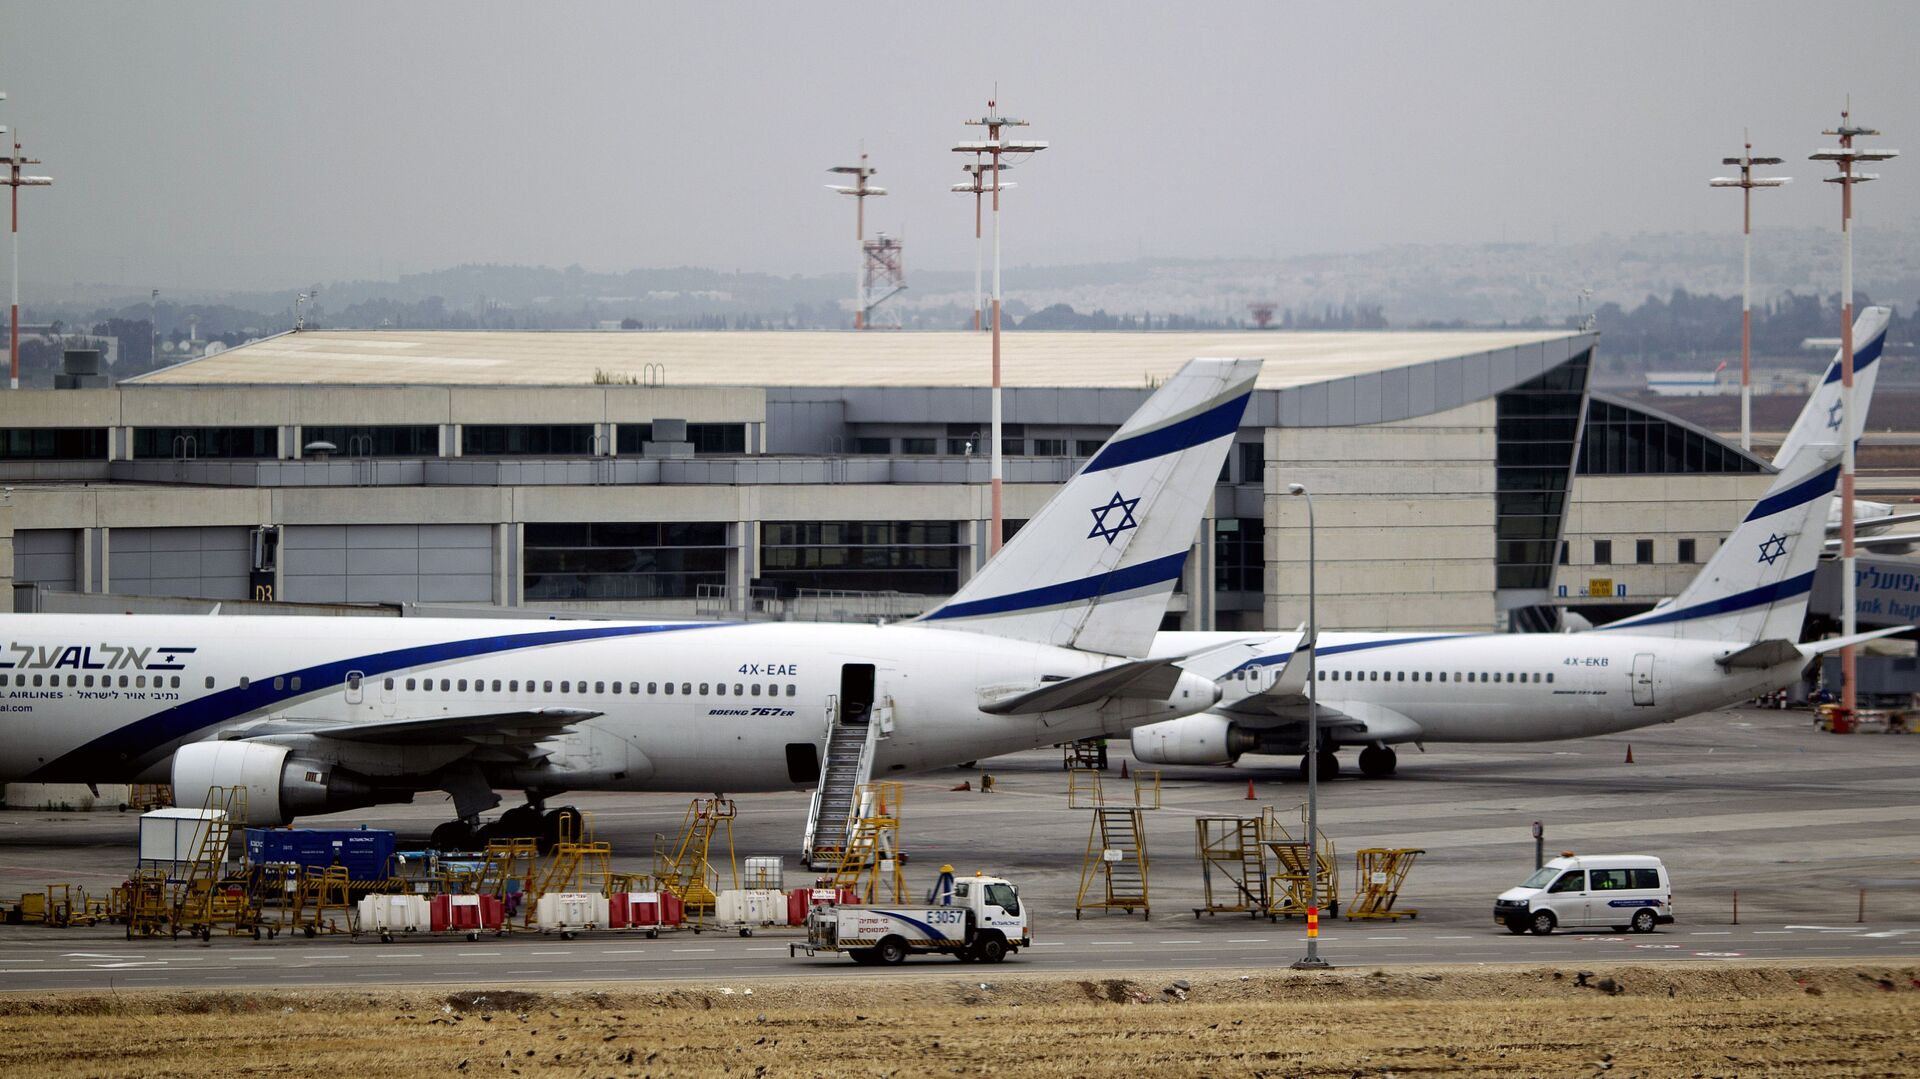 مطار بن غوريون الدولي في تل أبيب، إسرائيل 21 أبريل/ نيسان 2013 - سبوتنيك عربي, 1920, 29.09.2021